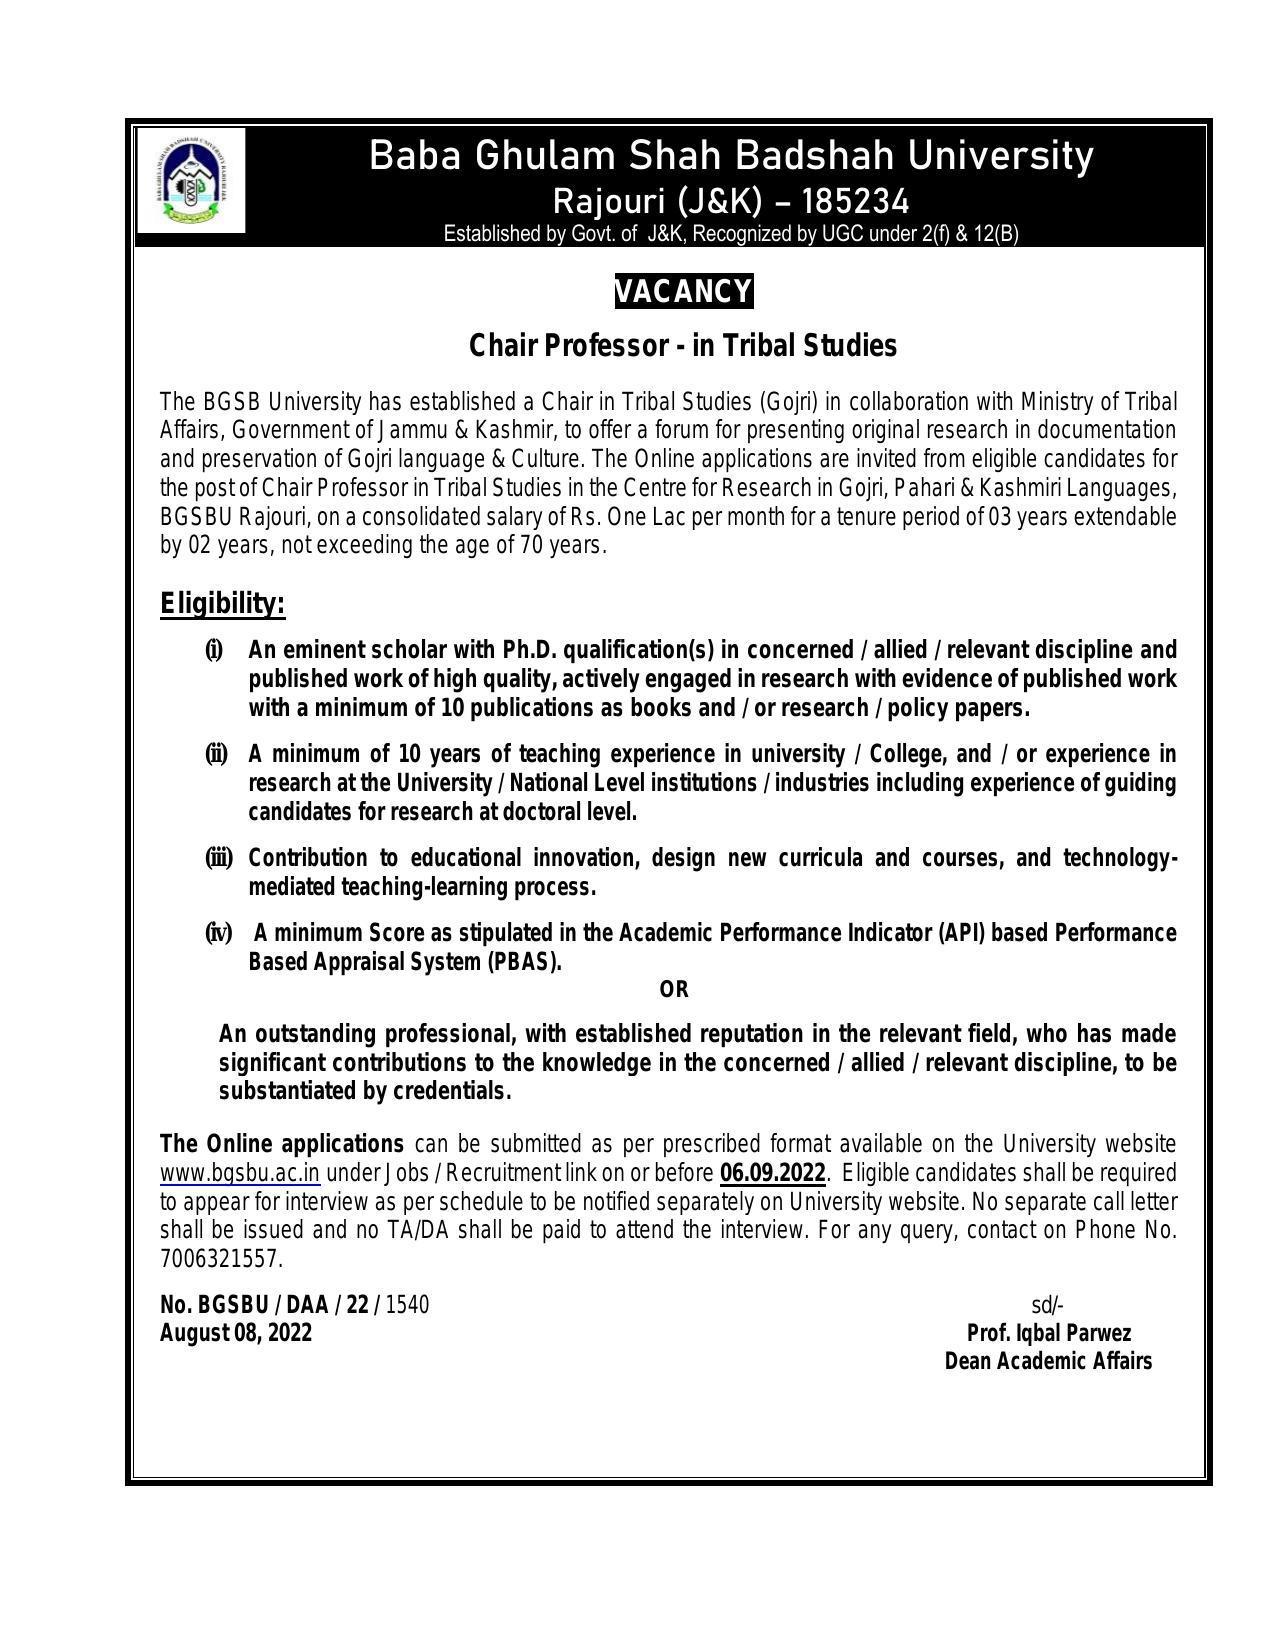 Baba Ghulam Shah Badshah University Recruitment 2022 for Chair Professor - Page 1